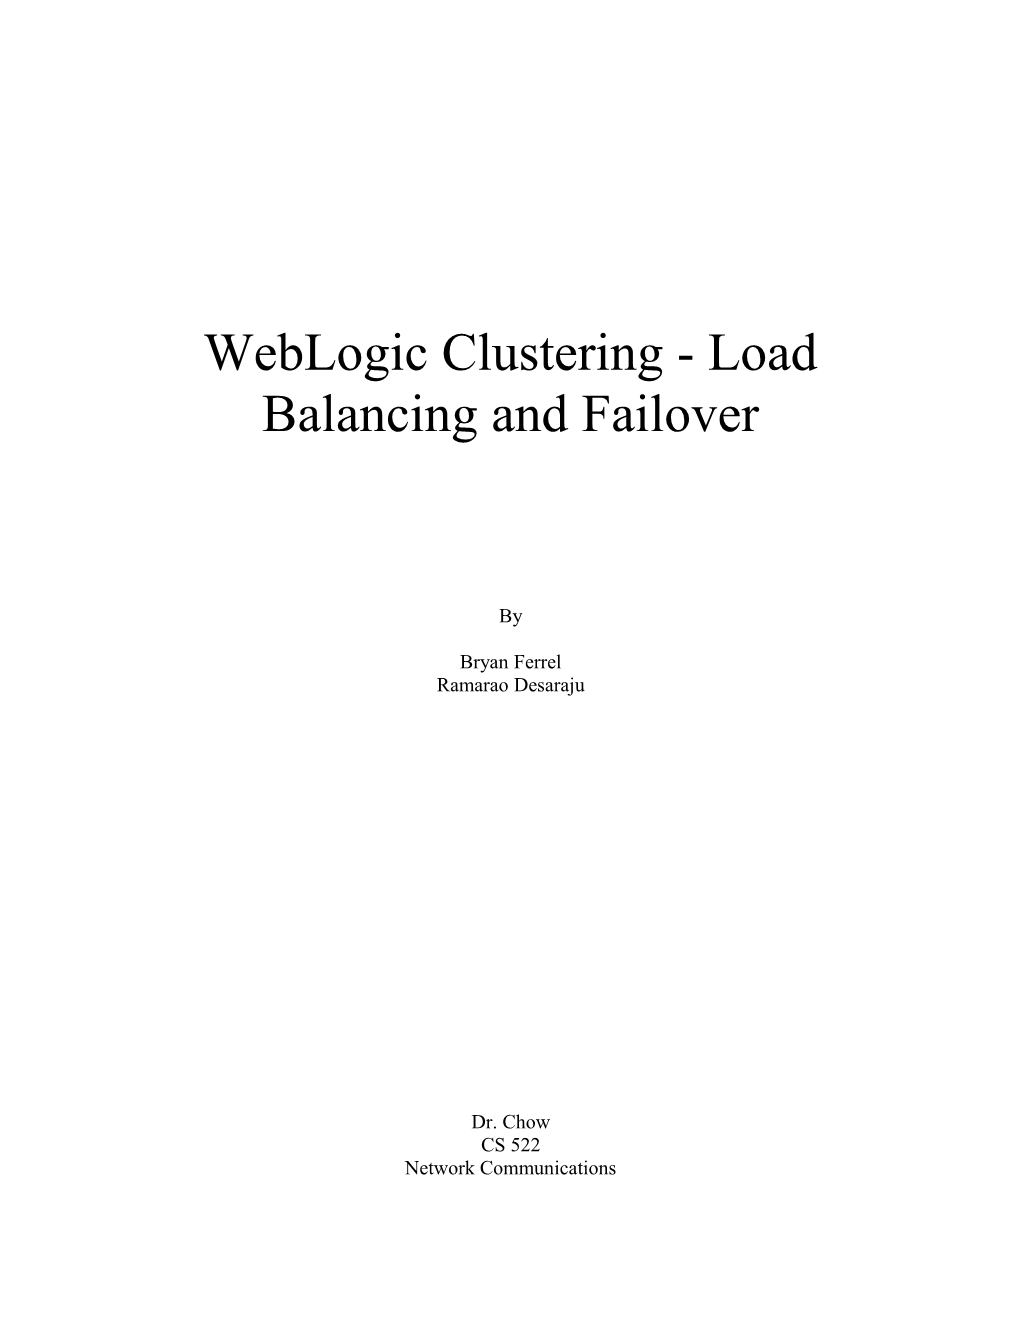 Weblogic Clustering, Failover, and Load Balancing